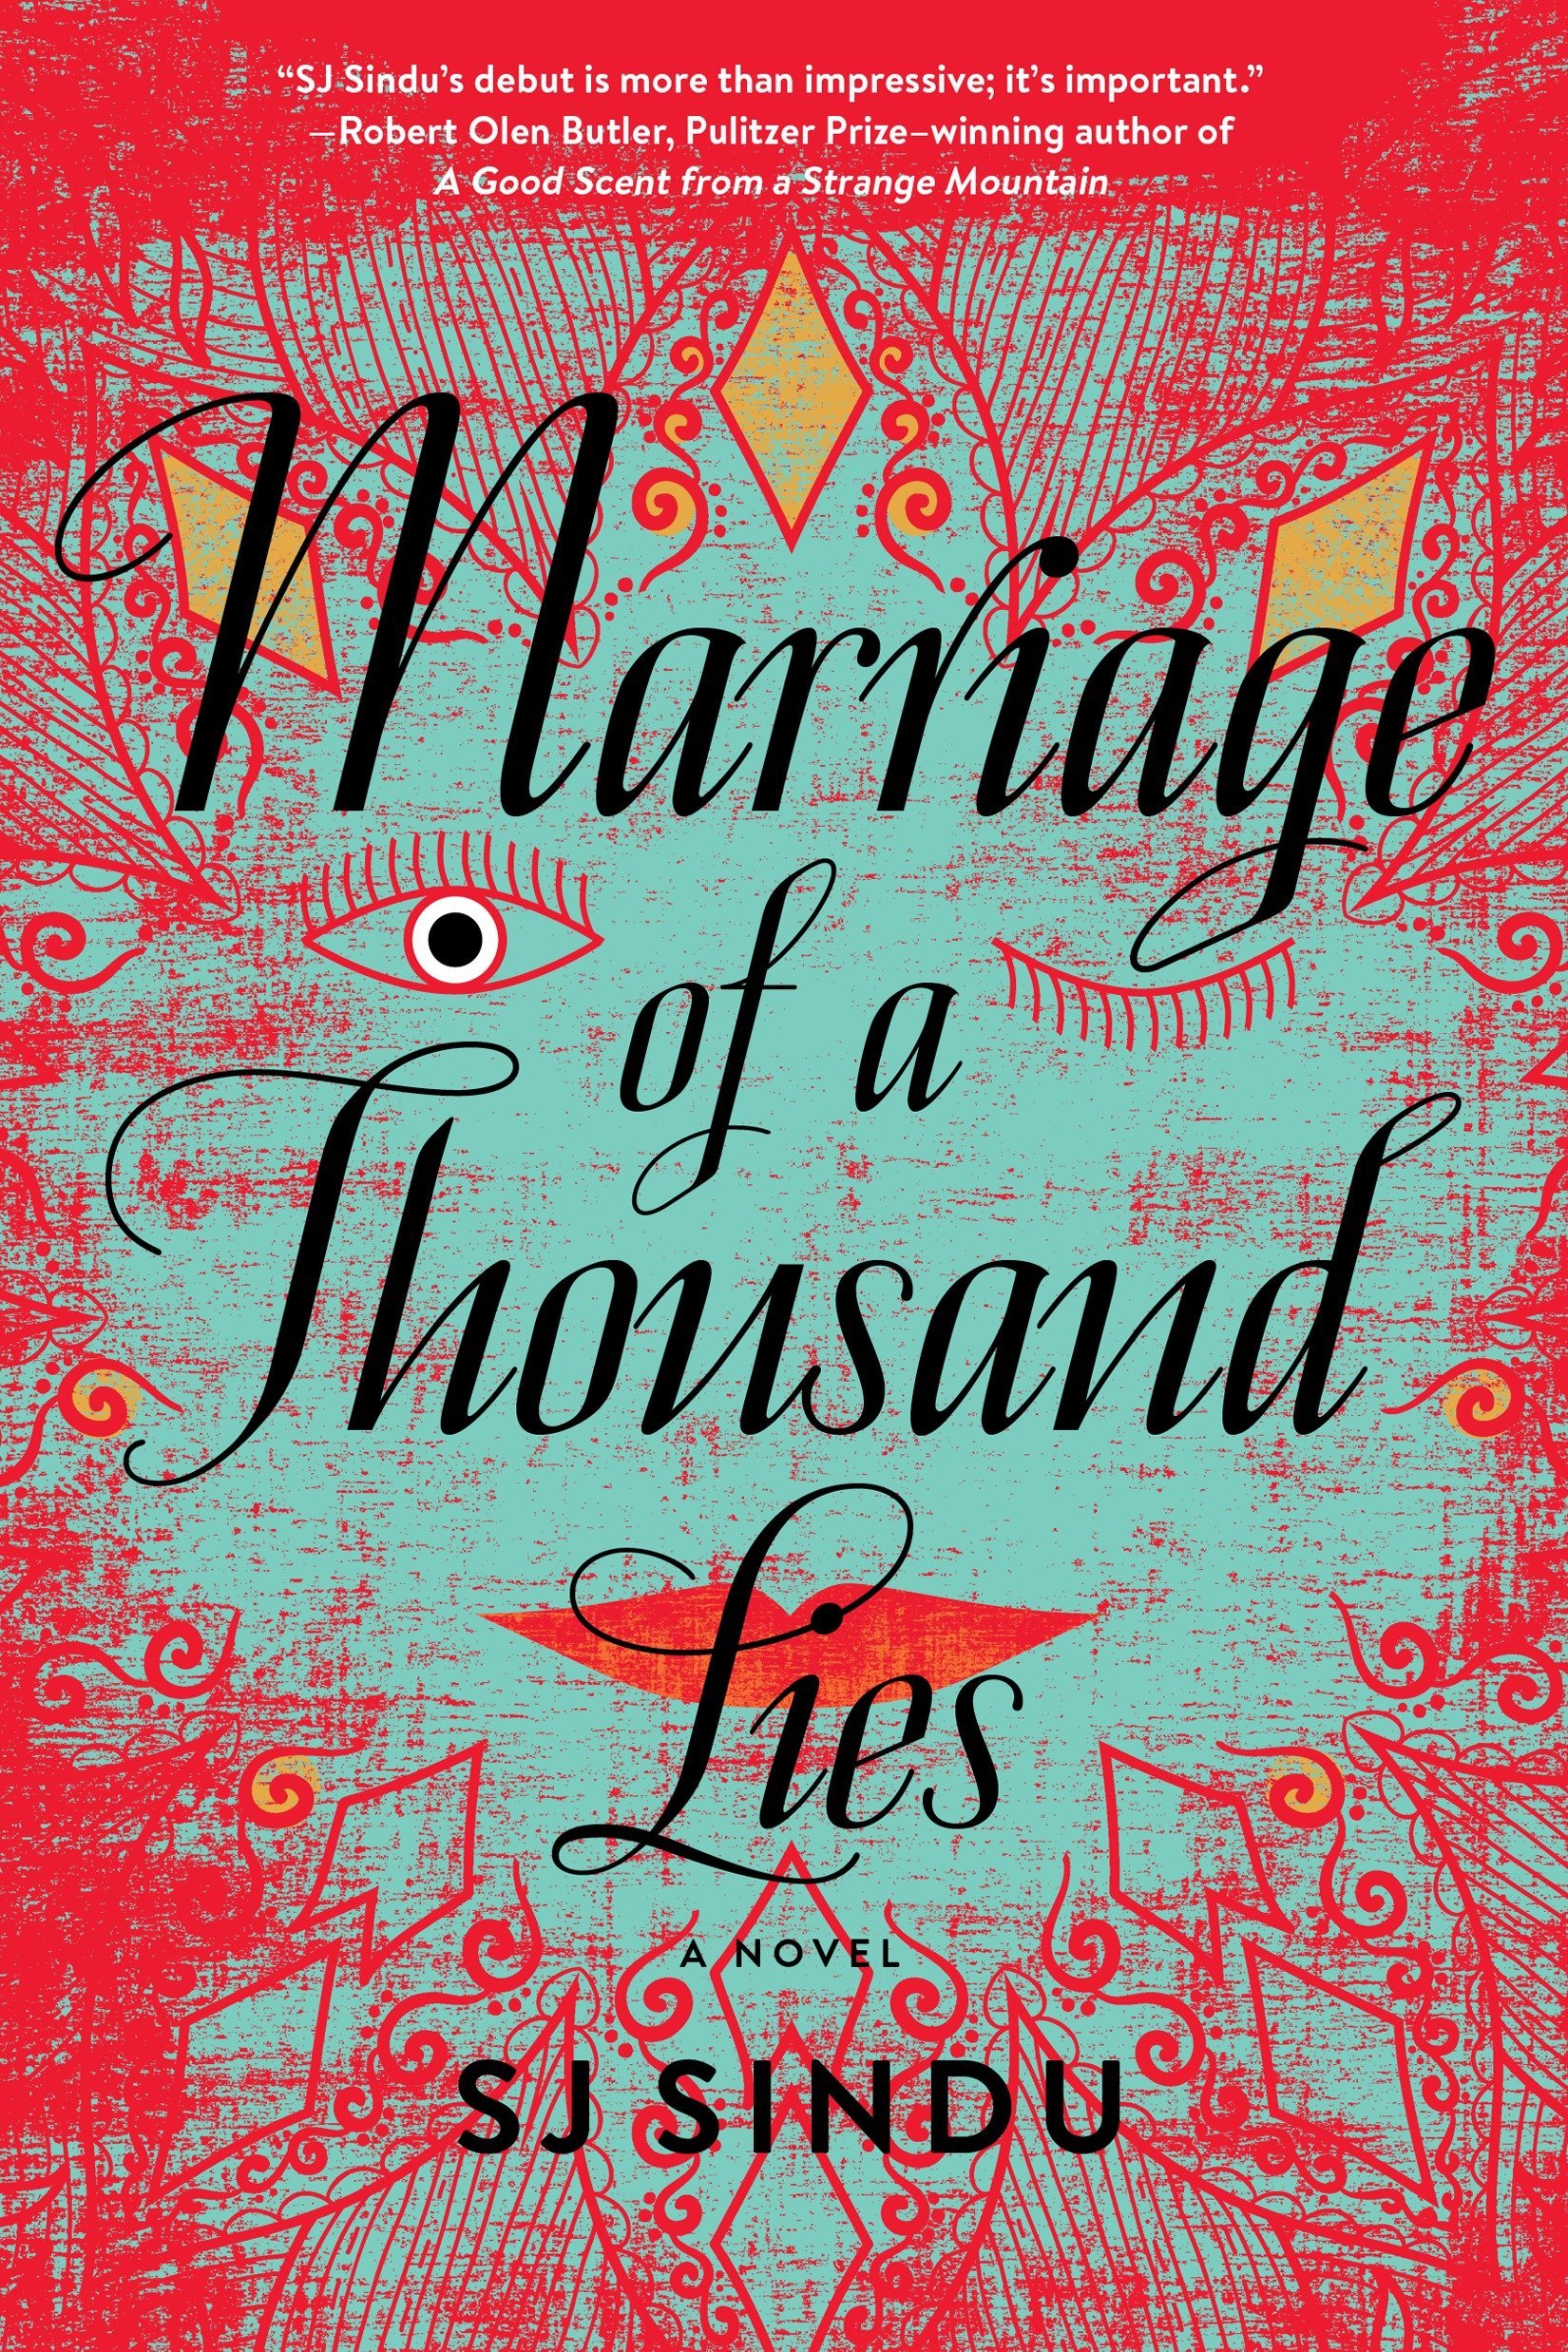 Marriage of a Thousand Lies by SJ Sindu